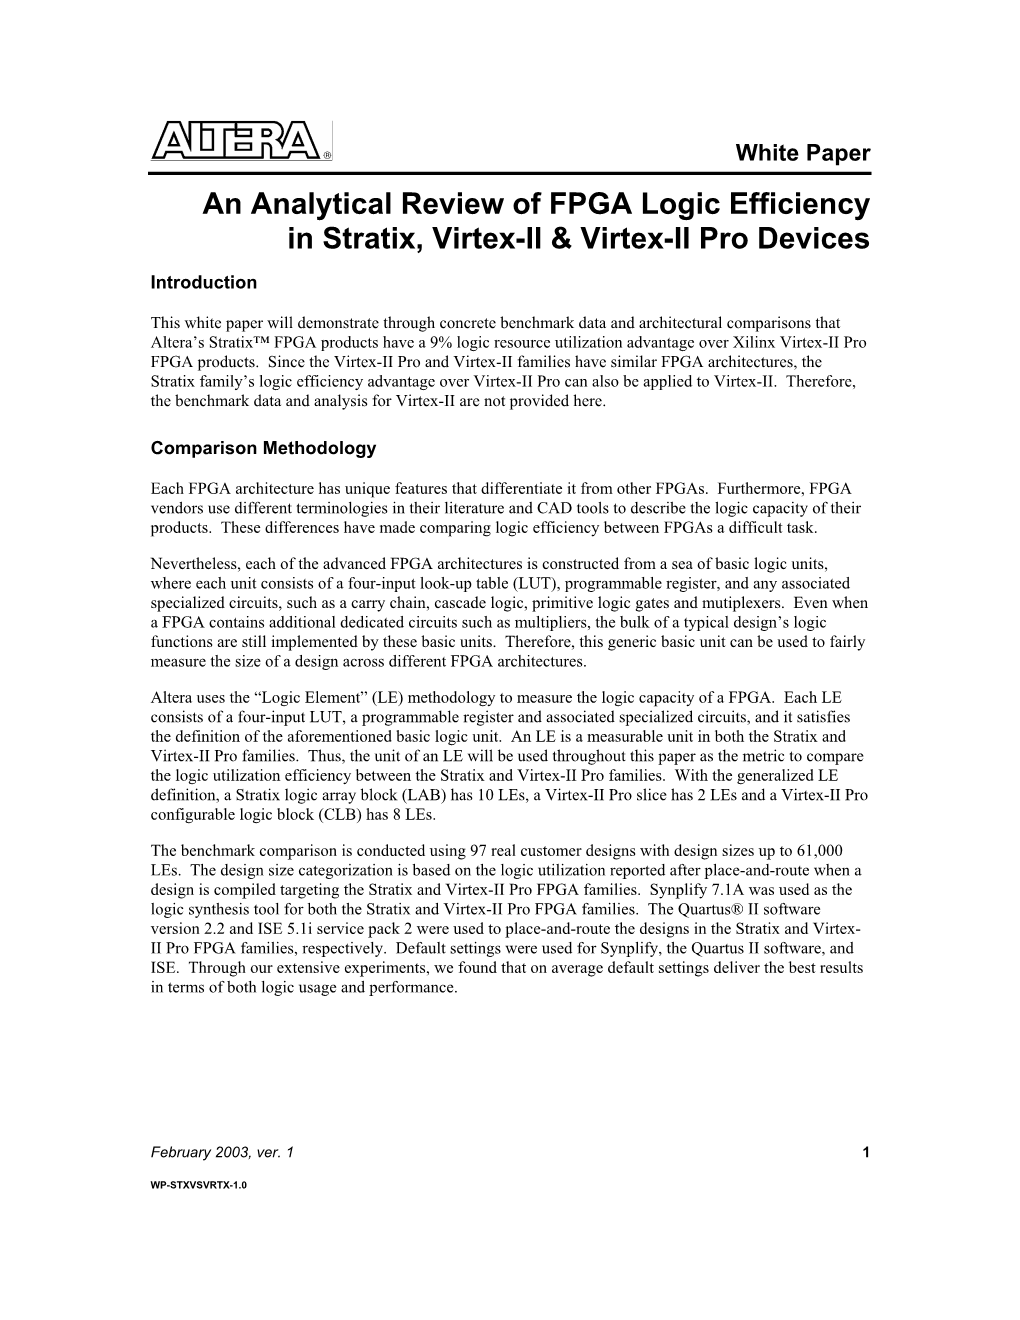 An Analytical Review of FPGA Logic Efficiency in Stratix, Virtex-II & Virtex-II Pro Devices